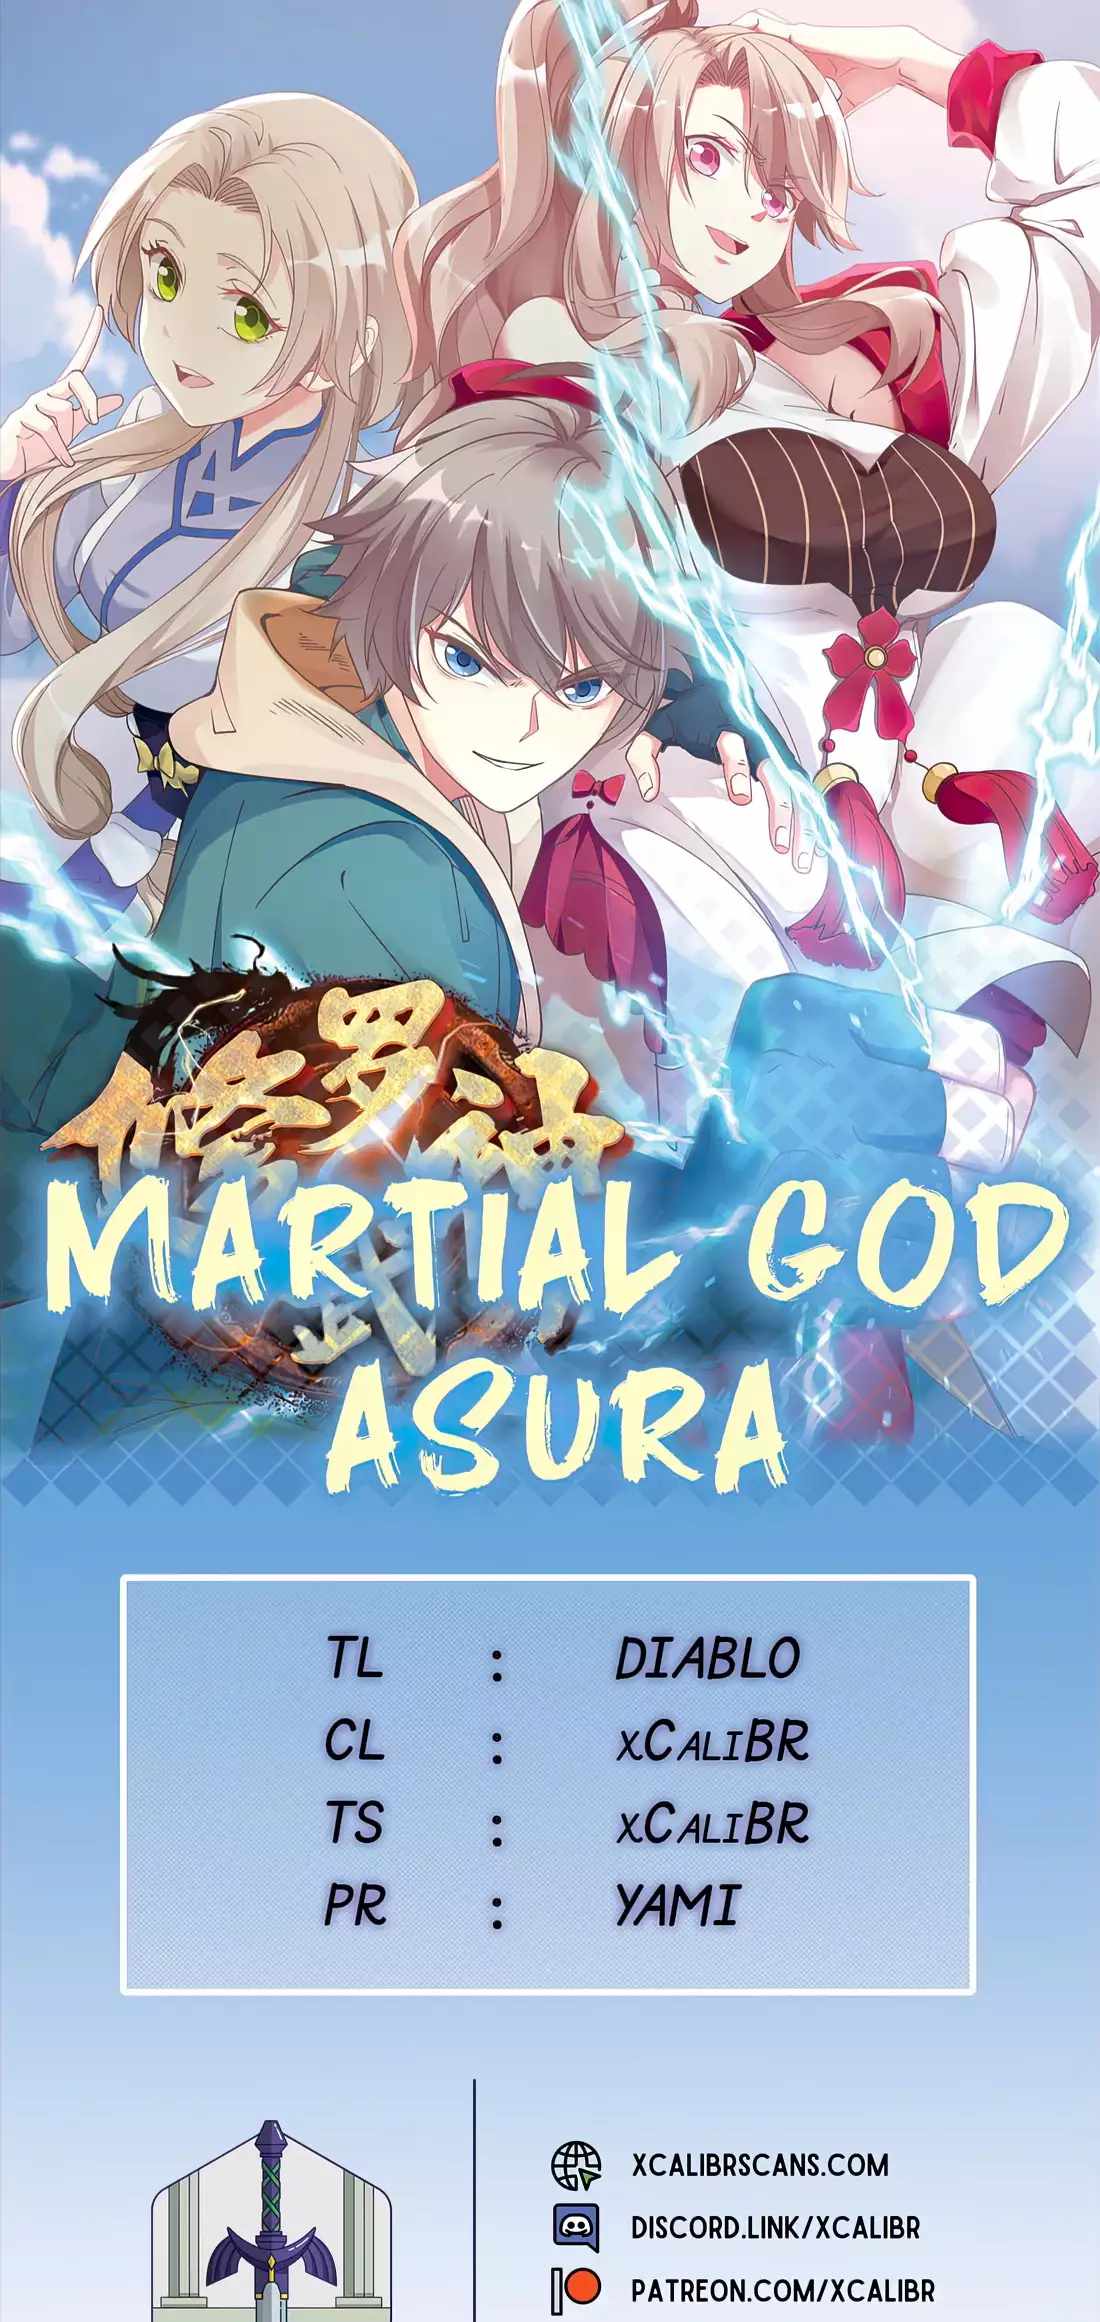 Martial God Asura chapter 597 page 1